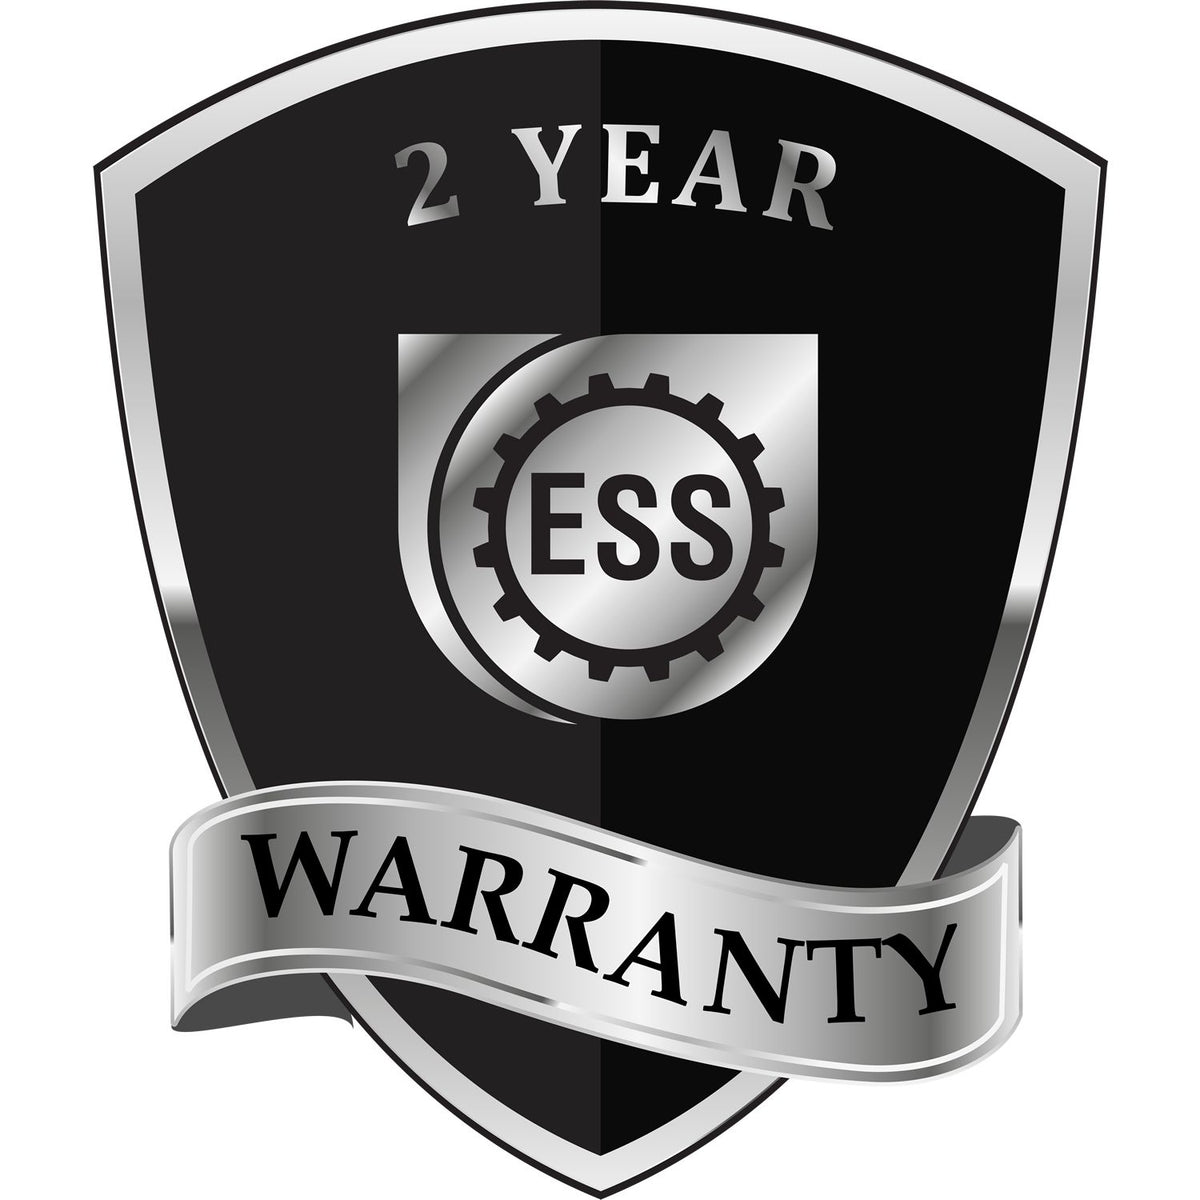 A black and silver badge or emblem showing warranty information for the Hybrid Maine Land Surveyor Seal